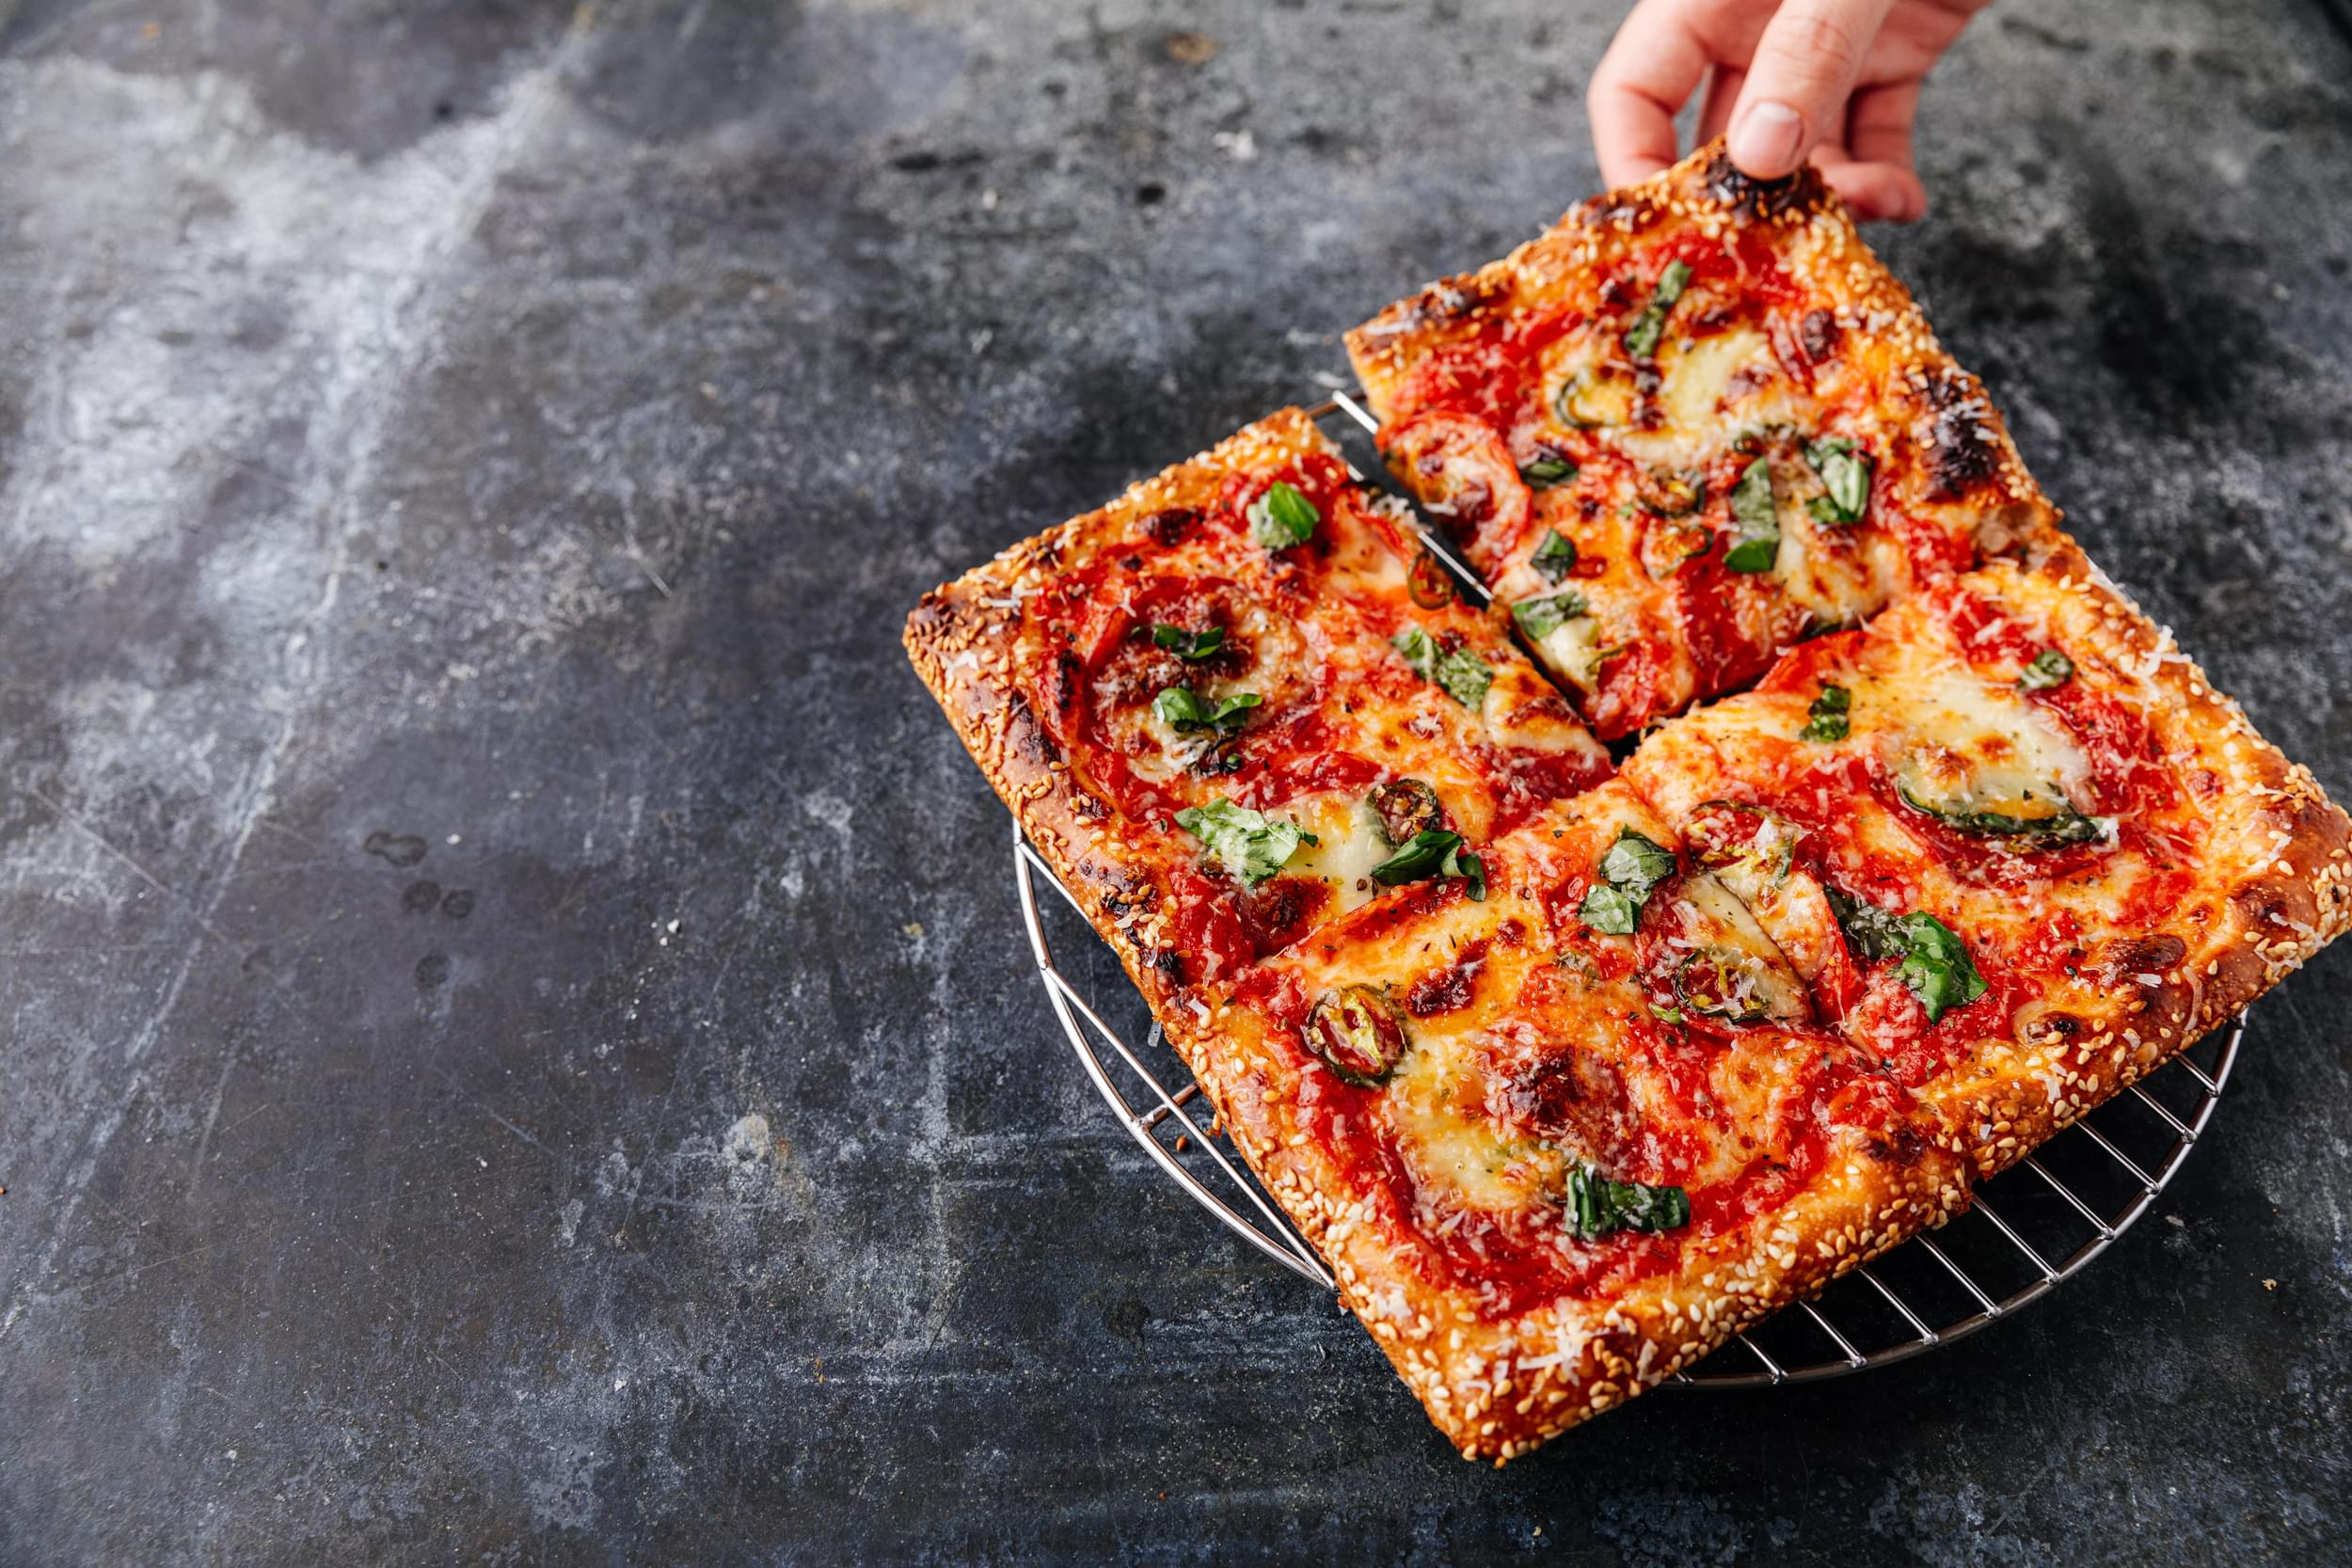 Sheet Pan Pizza Dough Recipe (for Easy Homemade Sicilian & Grandma Pizza)